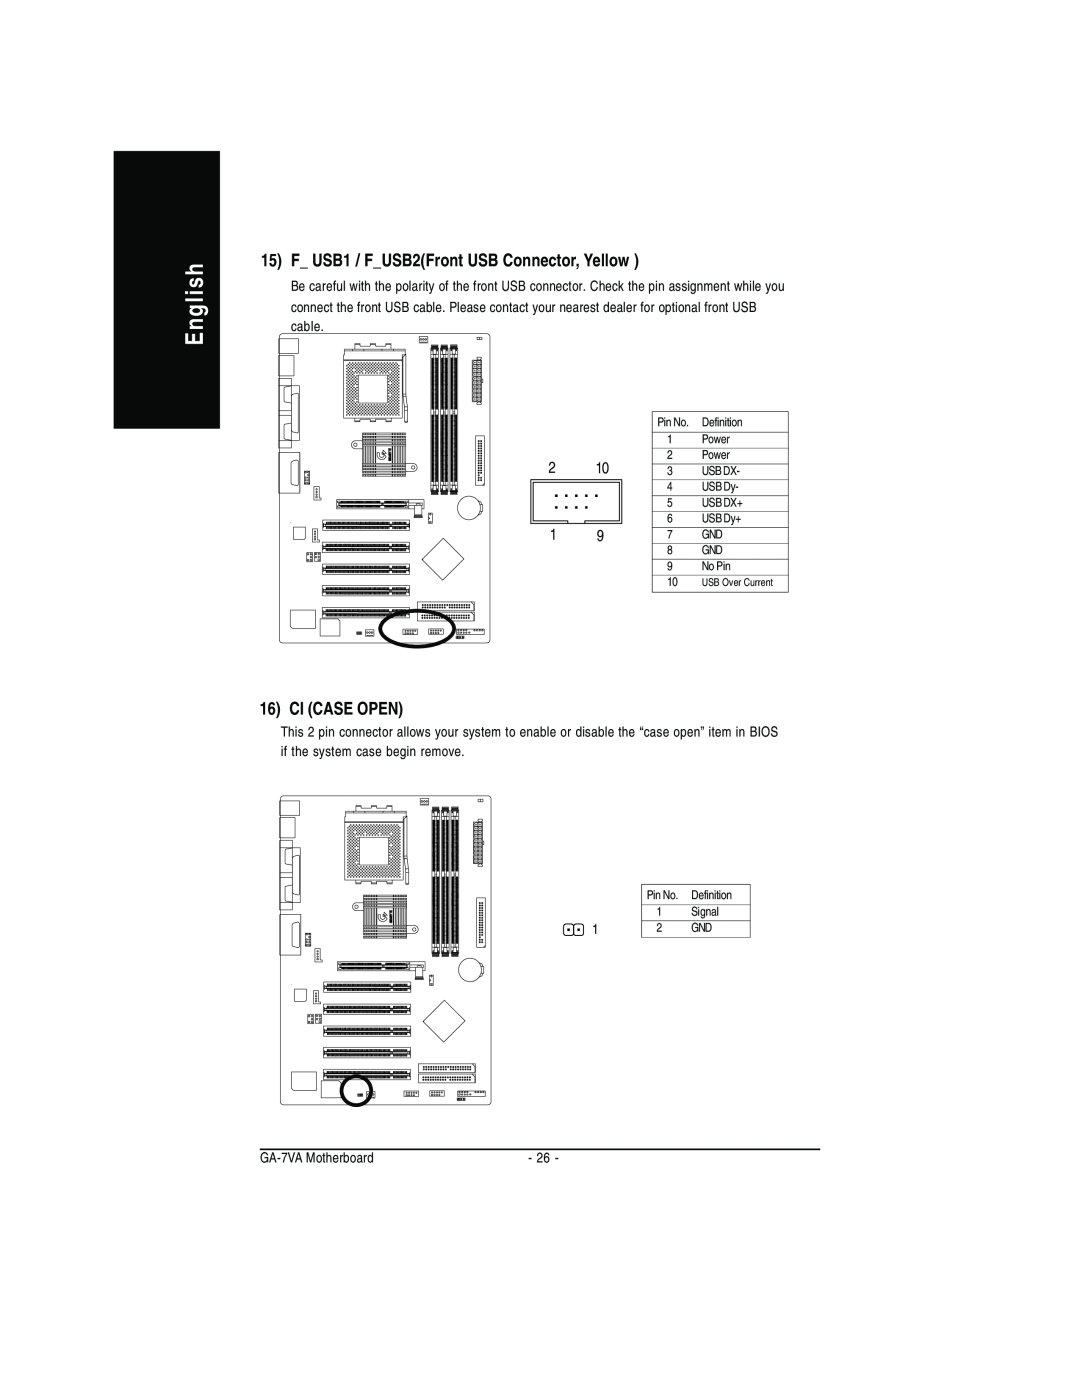 Gigabyte GA-7VA manual English, F USB1 / FUSB2Front USB Connector, Yellow, Ci Case Open, USB Over Current 